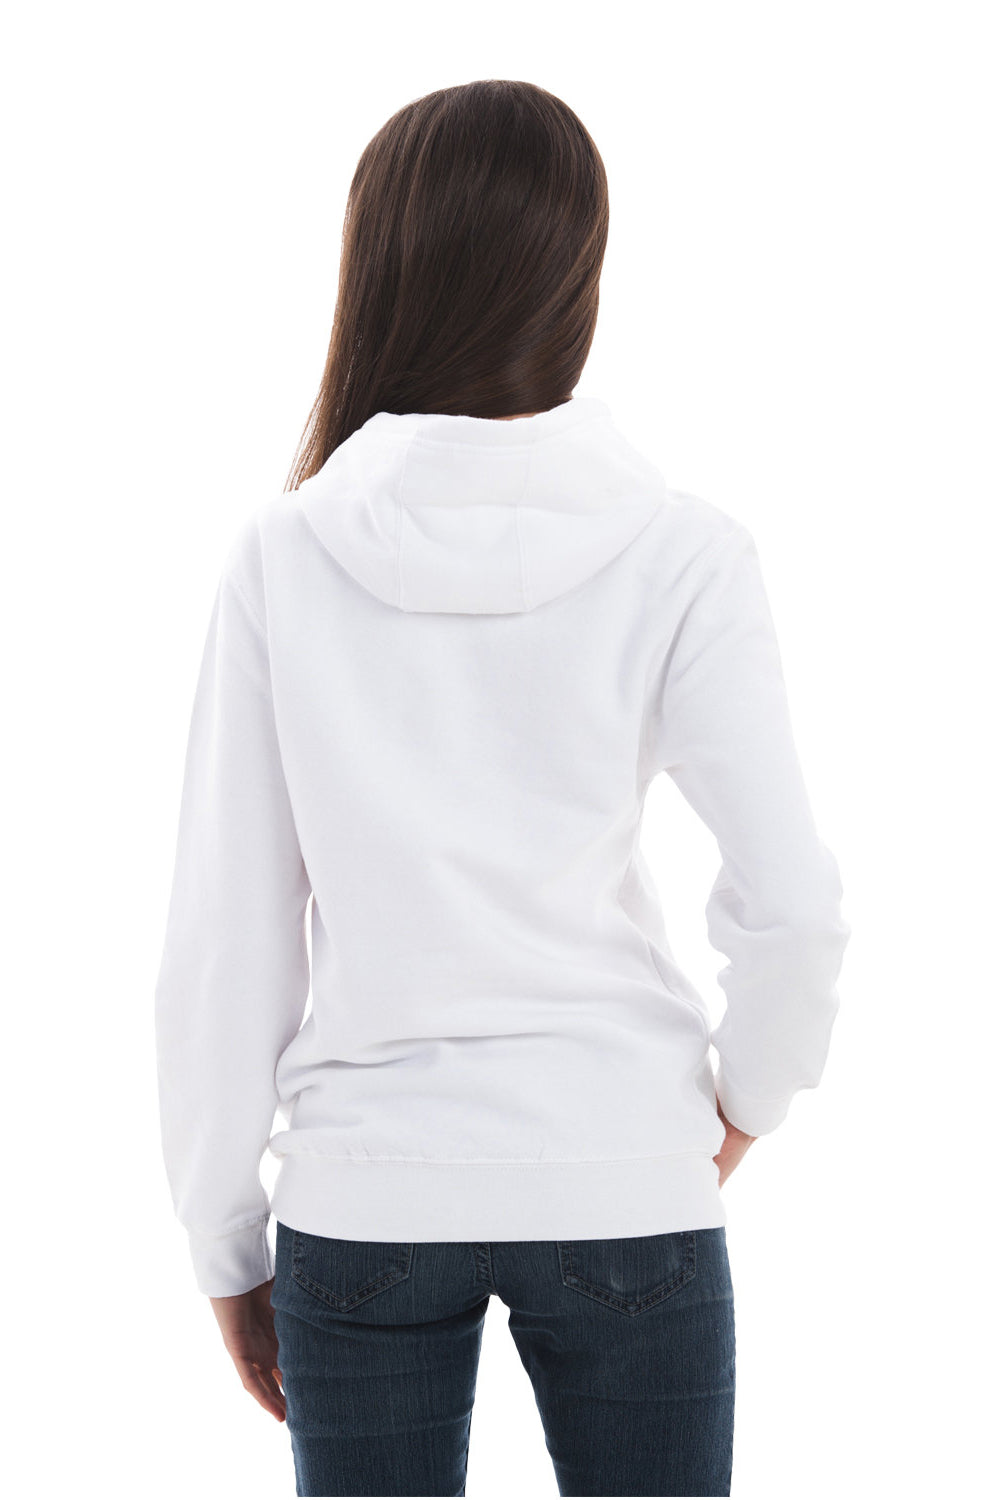 Lane Seven LS14001 Mens Premium Hooded Sweatshirt Hoodie White Back